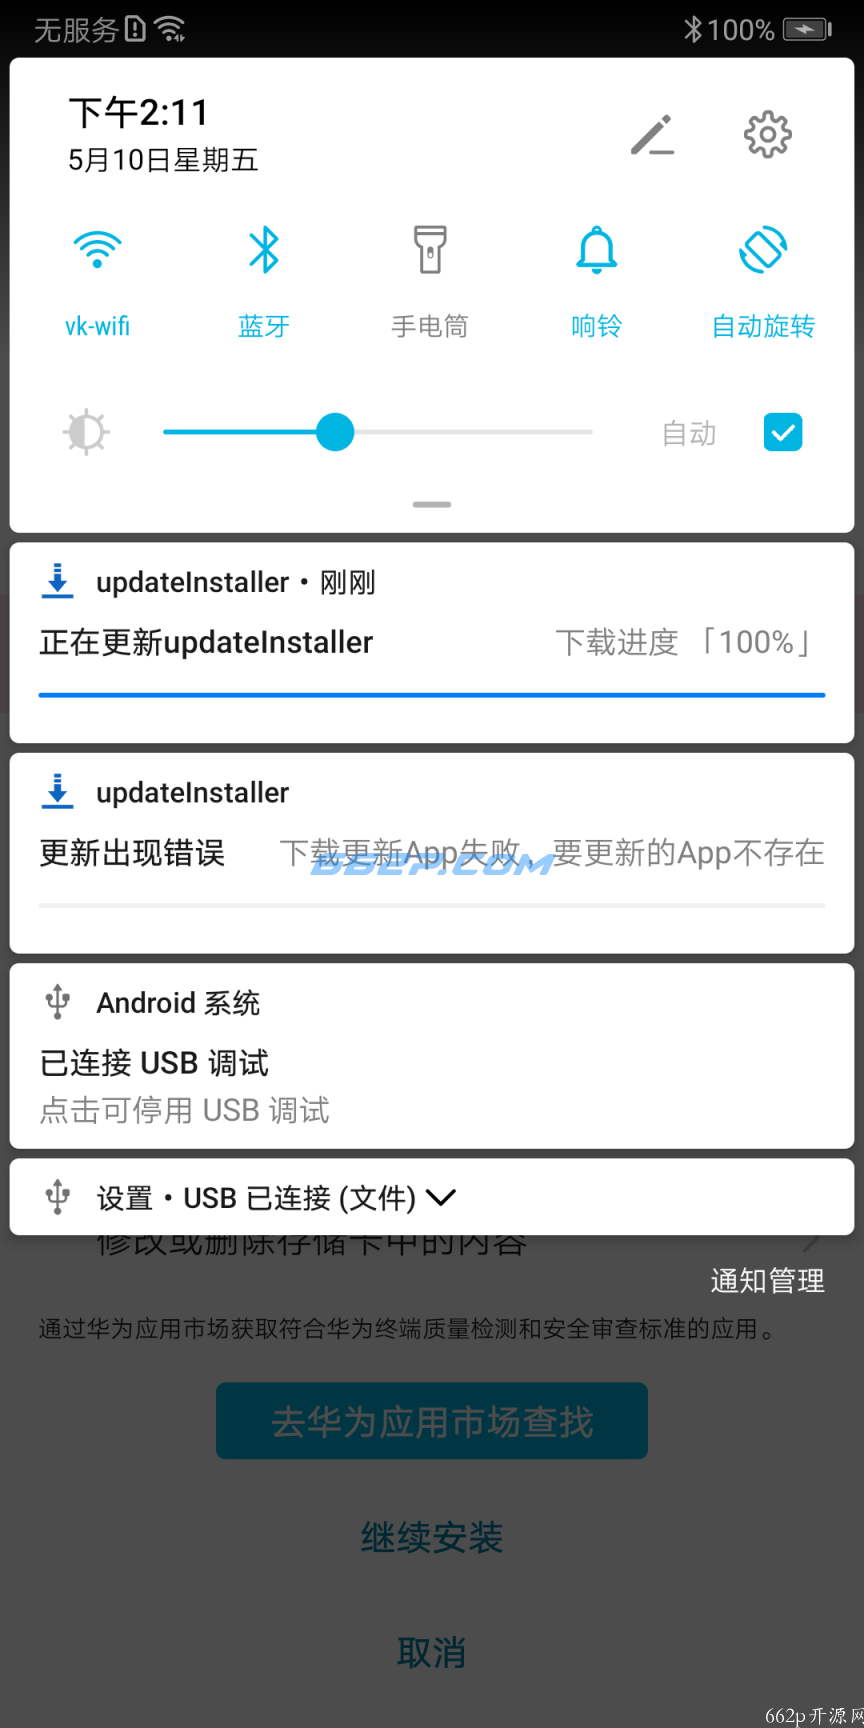 Android实现应用内下载，储存安装功能DownloadInstaller